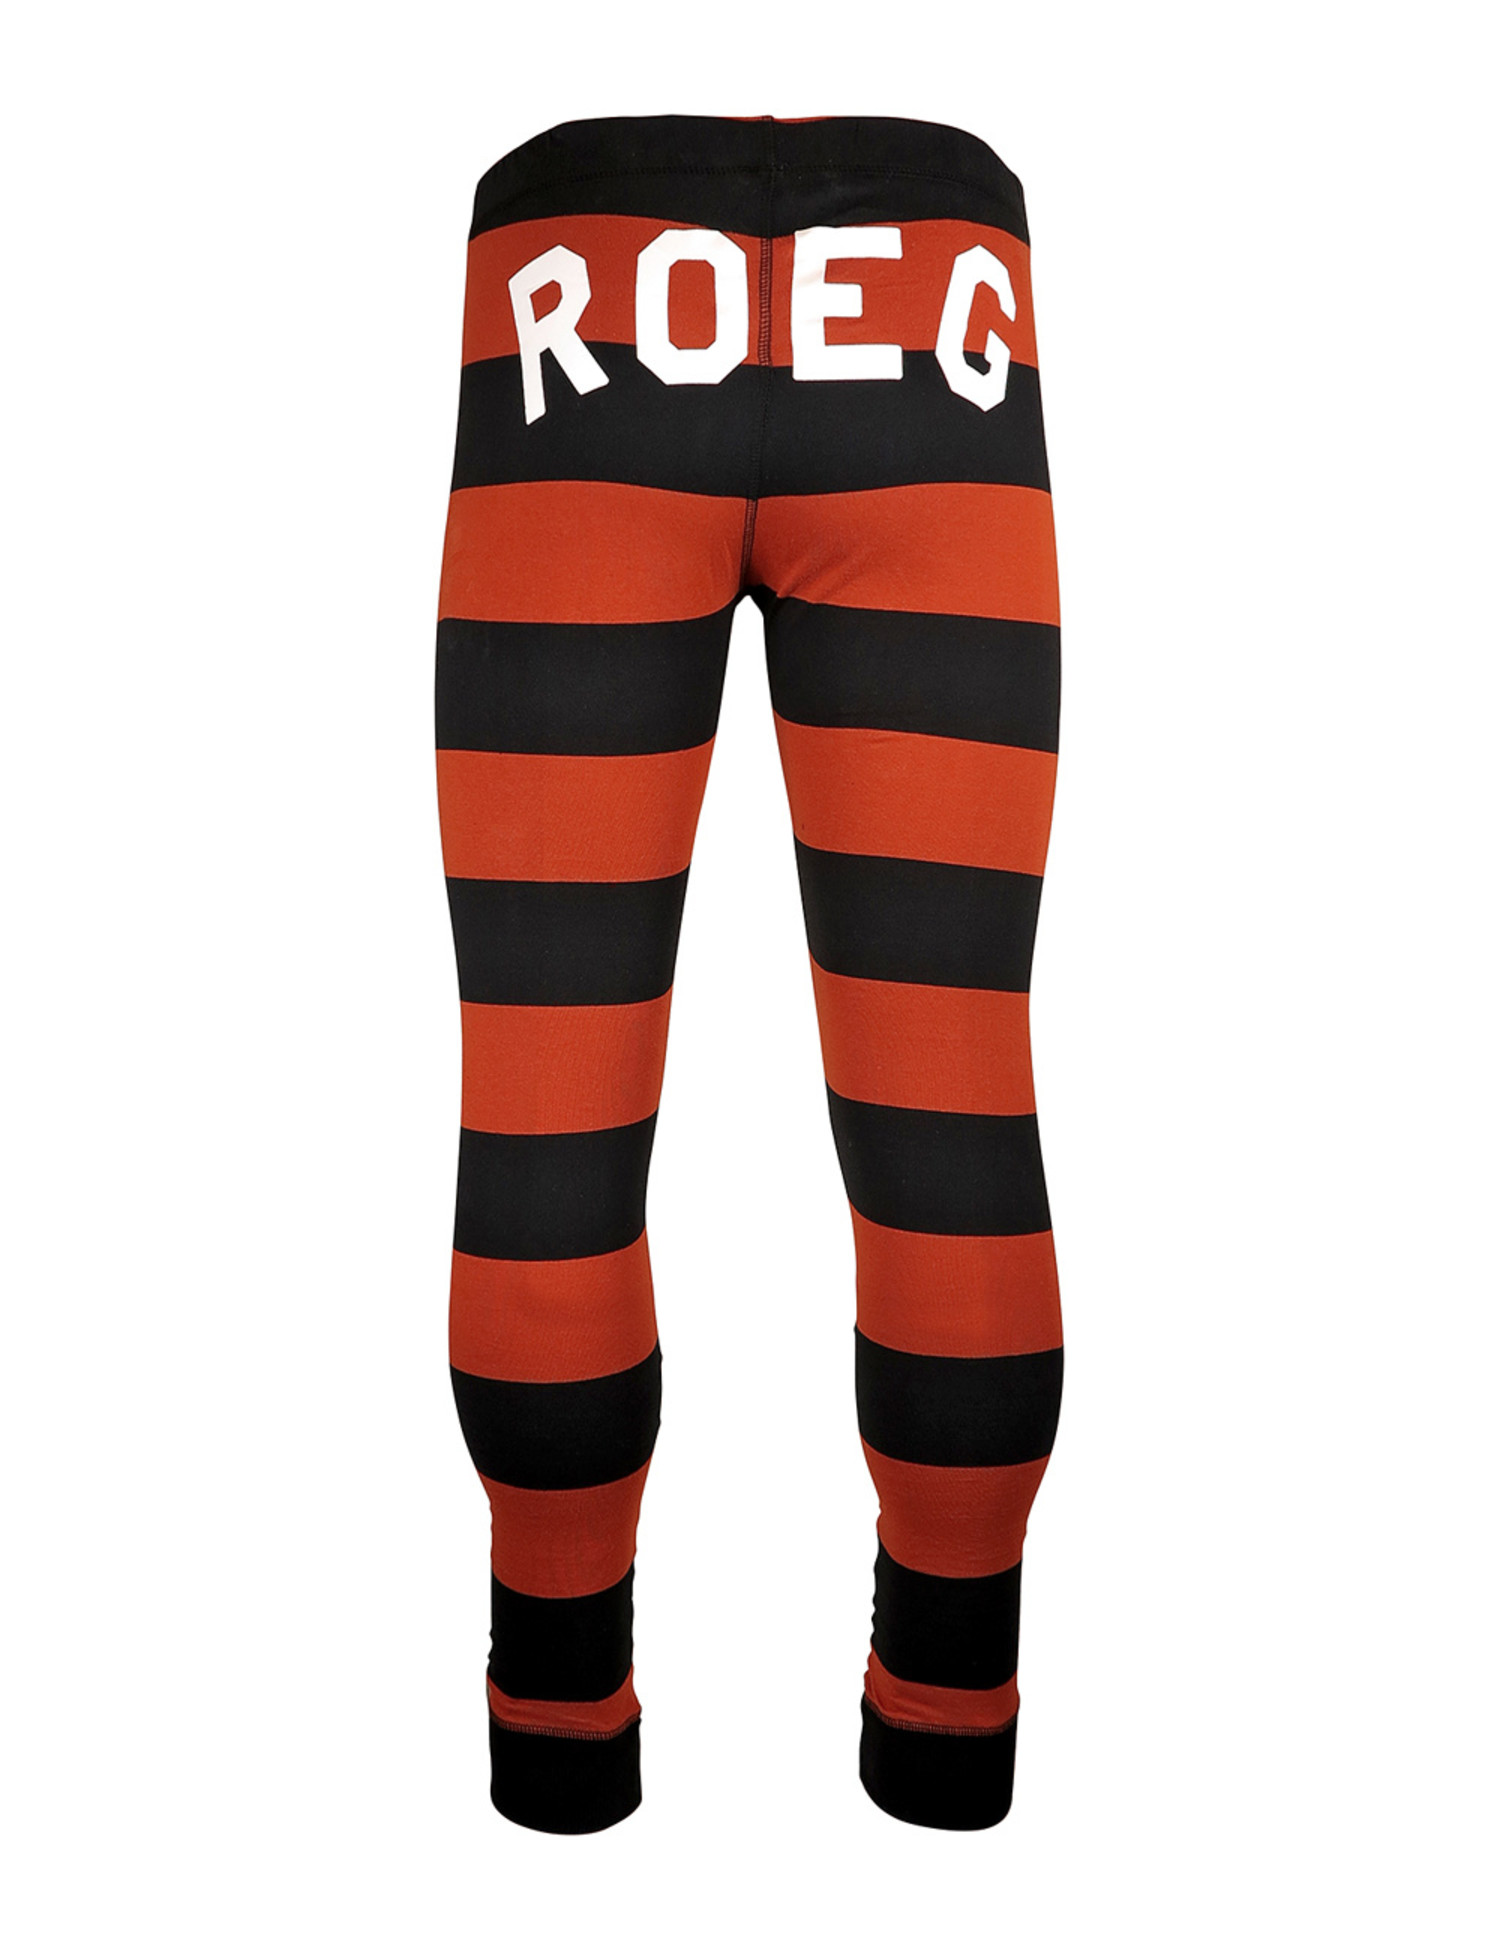 Roeg Long John striped pant black/orange